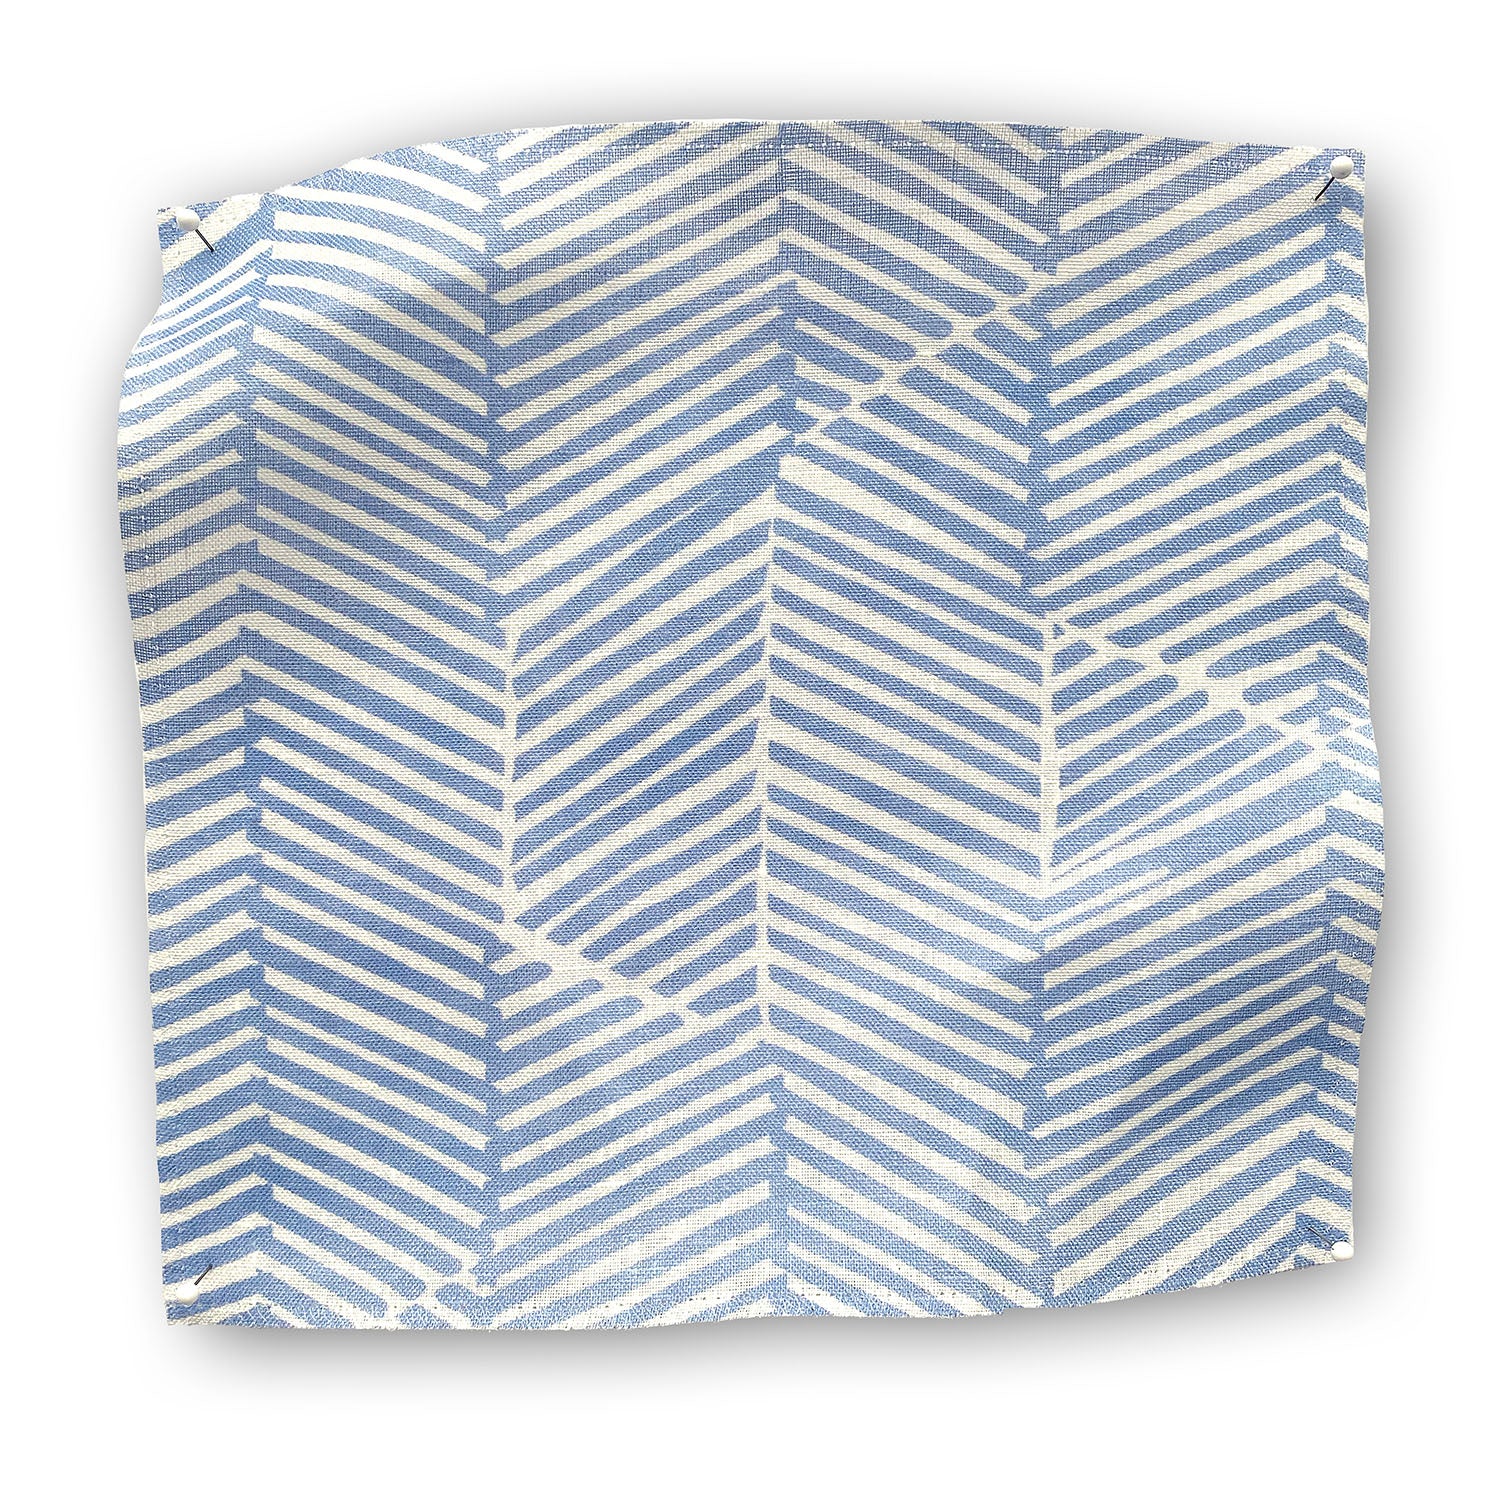 Square fabric swatch in a dense herringbone print in blue on a white field.